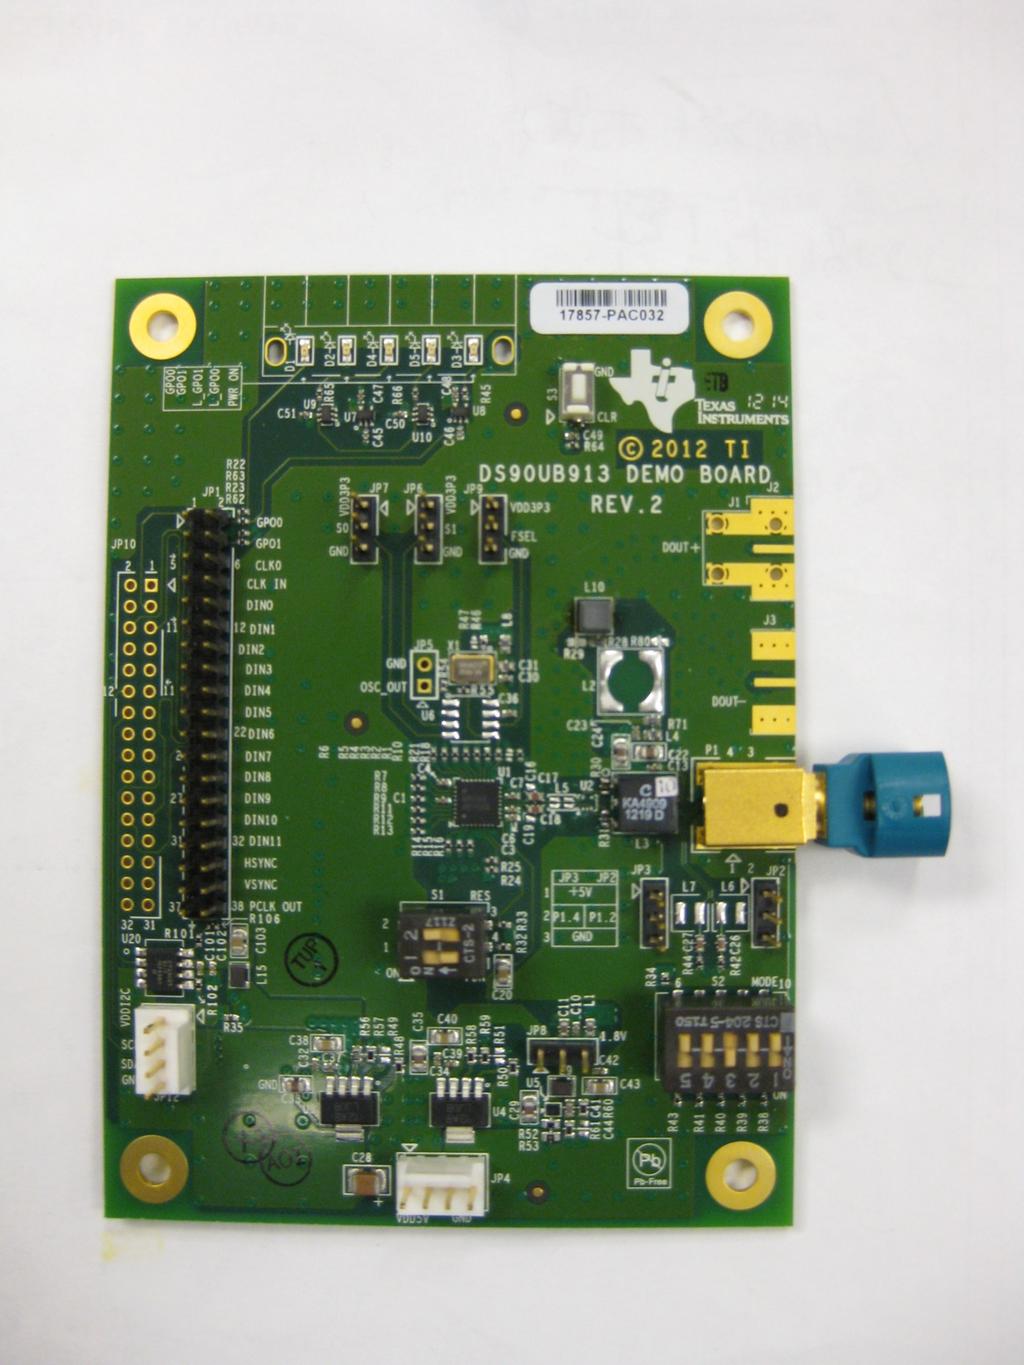 Switch 1 PDB S1 JP1 : D0:D11, HS, VS, PCLK Switch 2 RES0 (Tied Low) S2 Switch 3 External Oscillator mode JP4